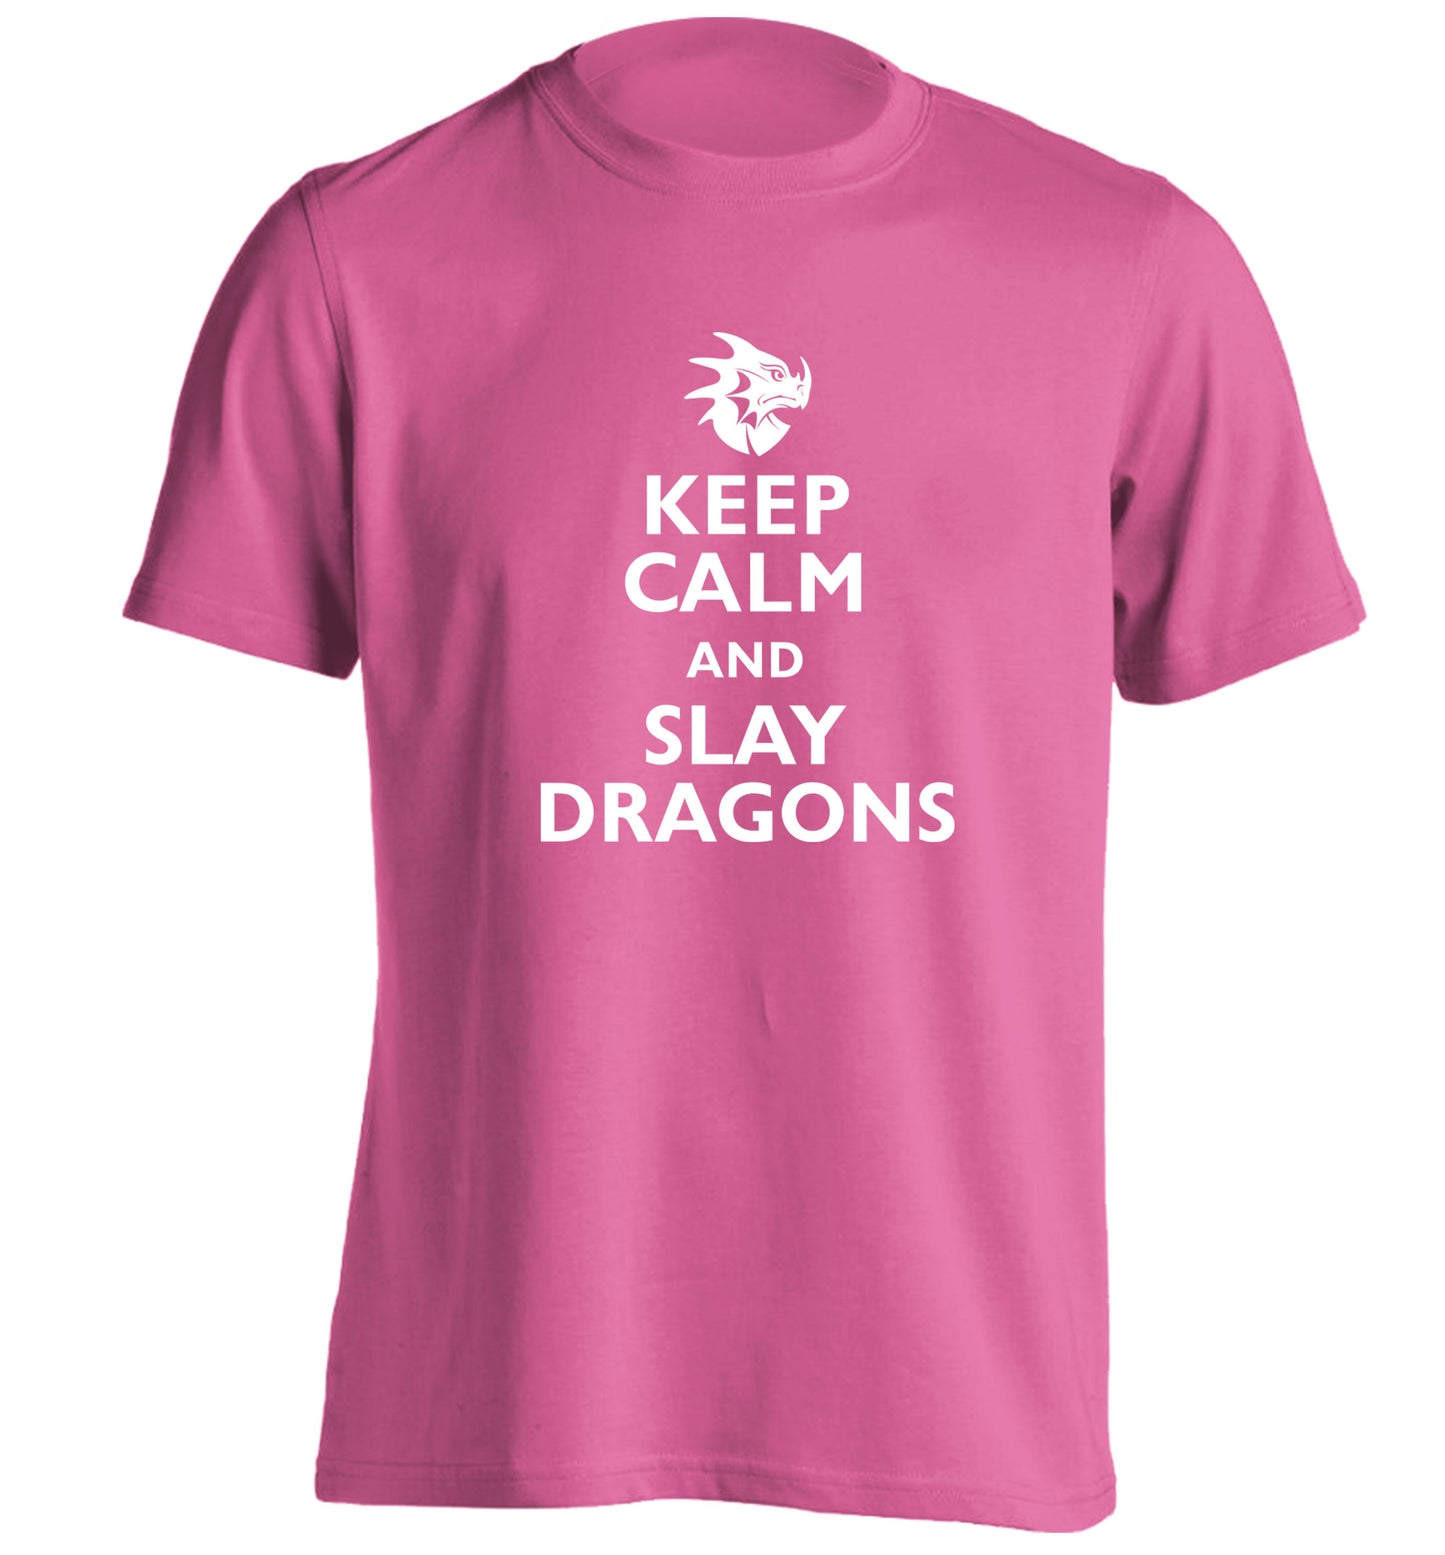 Keep calm and slay dragons adults unisex pink Tshirt 2XL